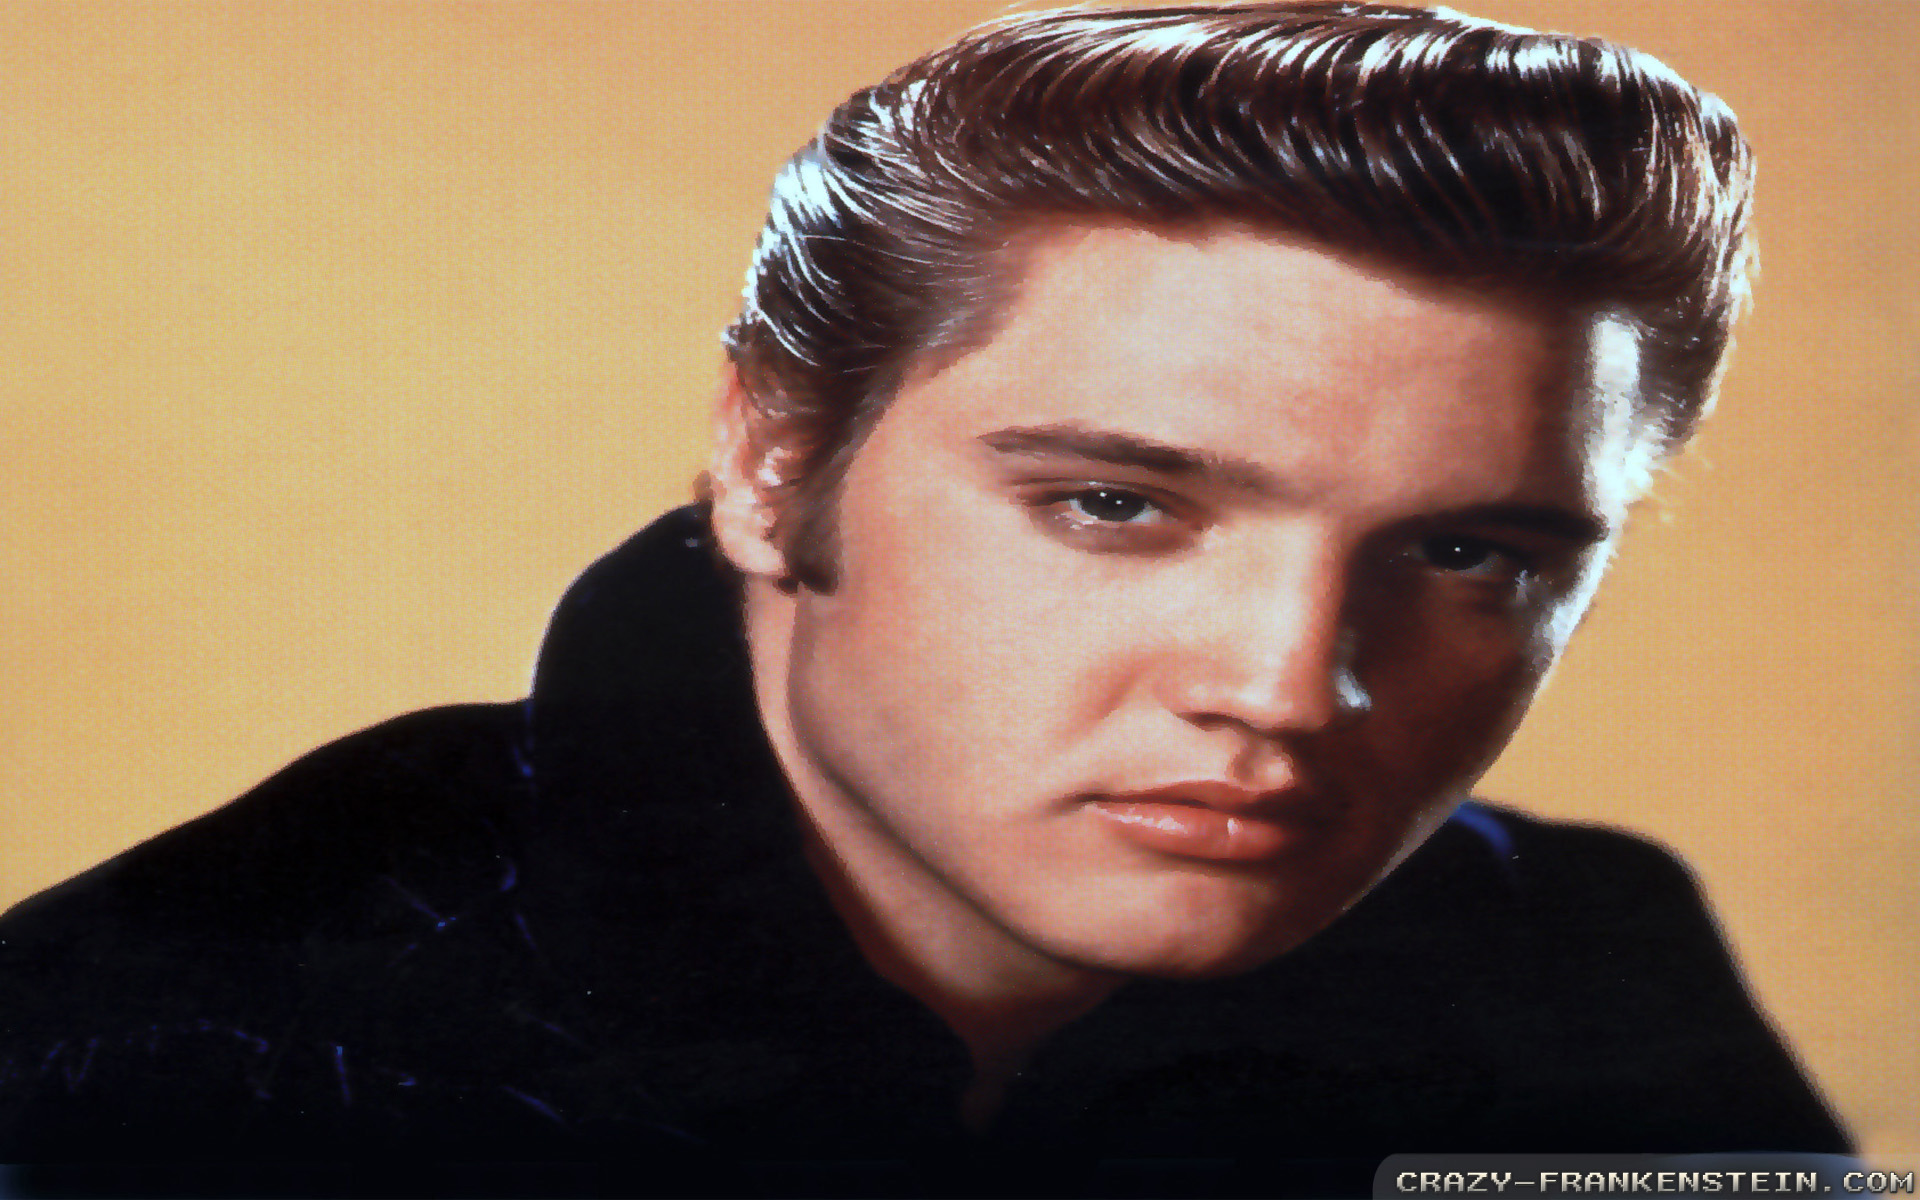 Elvis Presley Wallpaper Male Celebrity Crazy Frankenstein